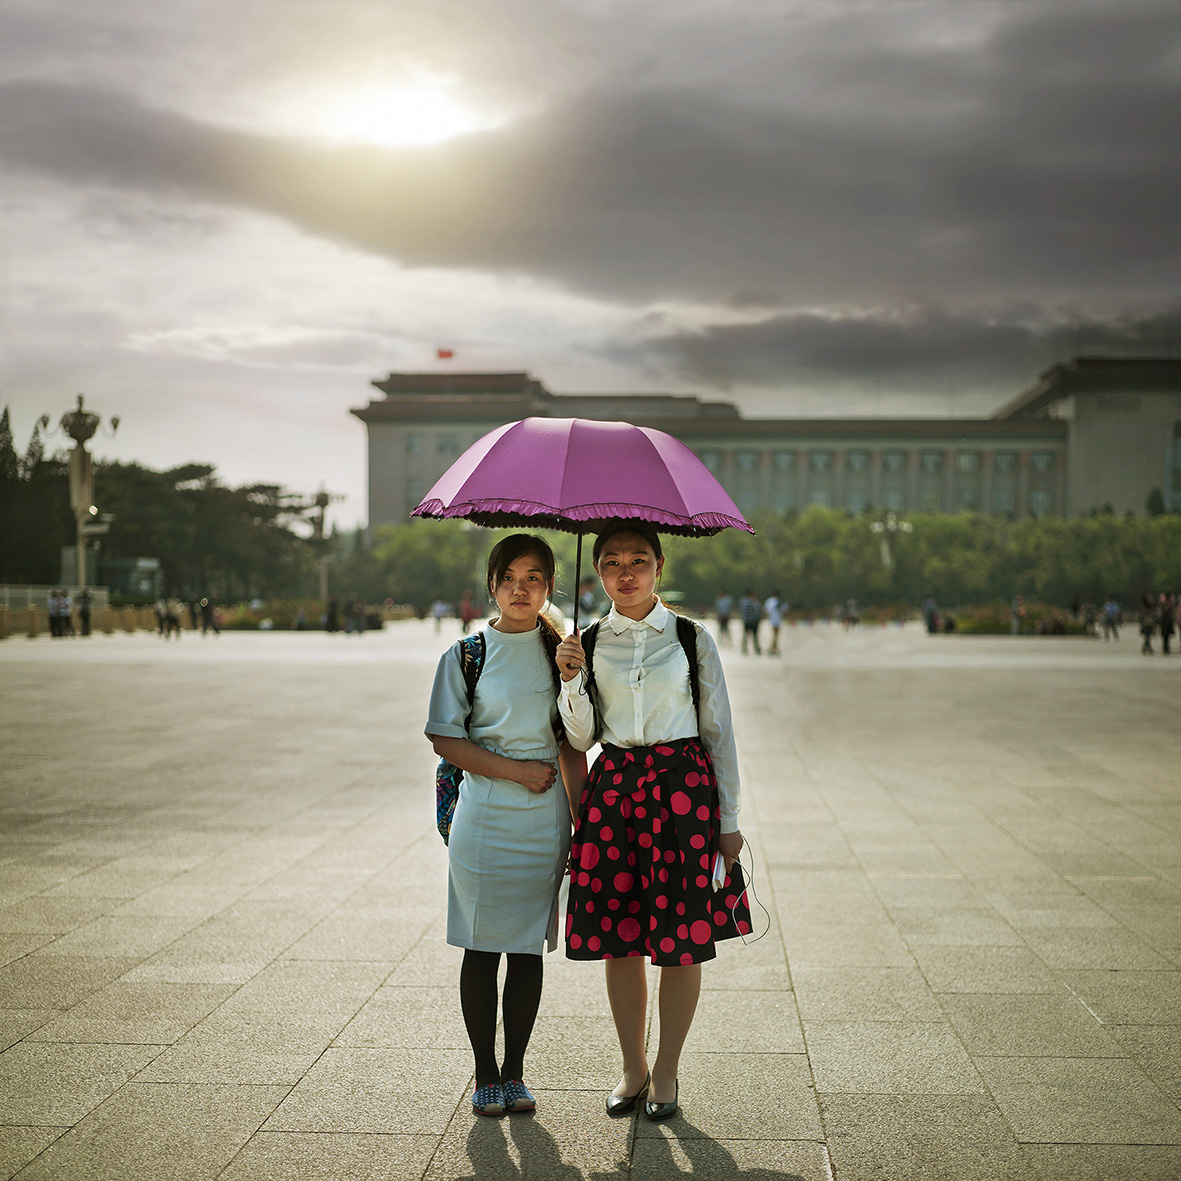 İki Genç Kız Two Young Girls, Pekin Beijing, Çin China, 2015